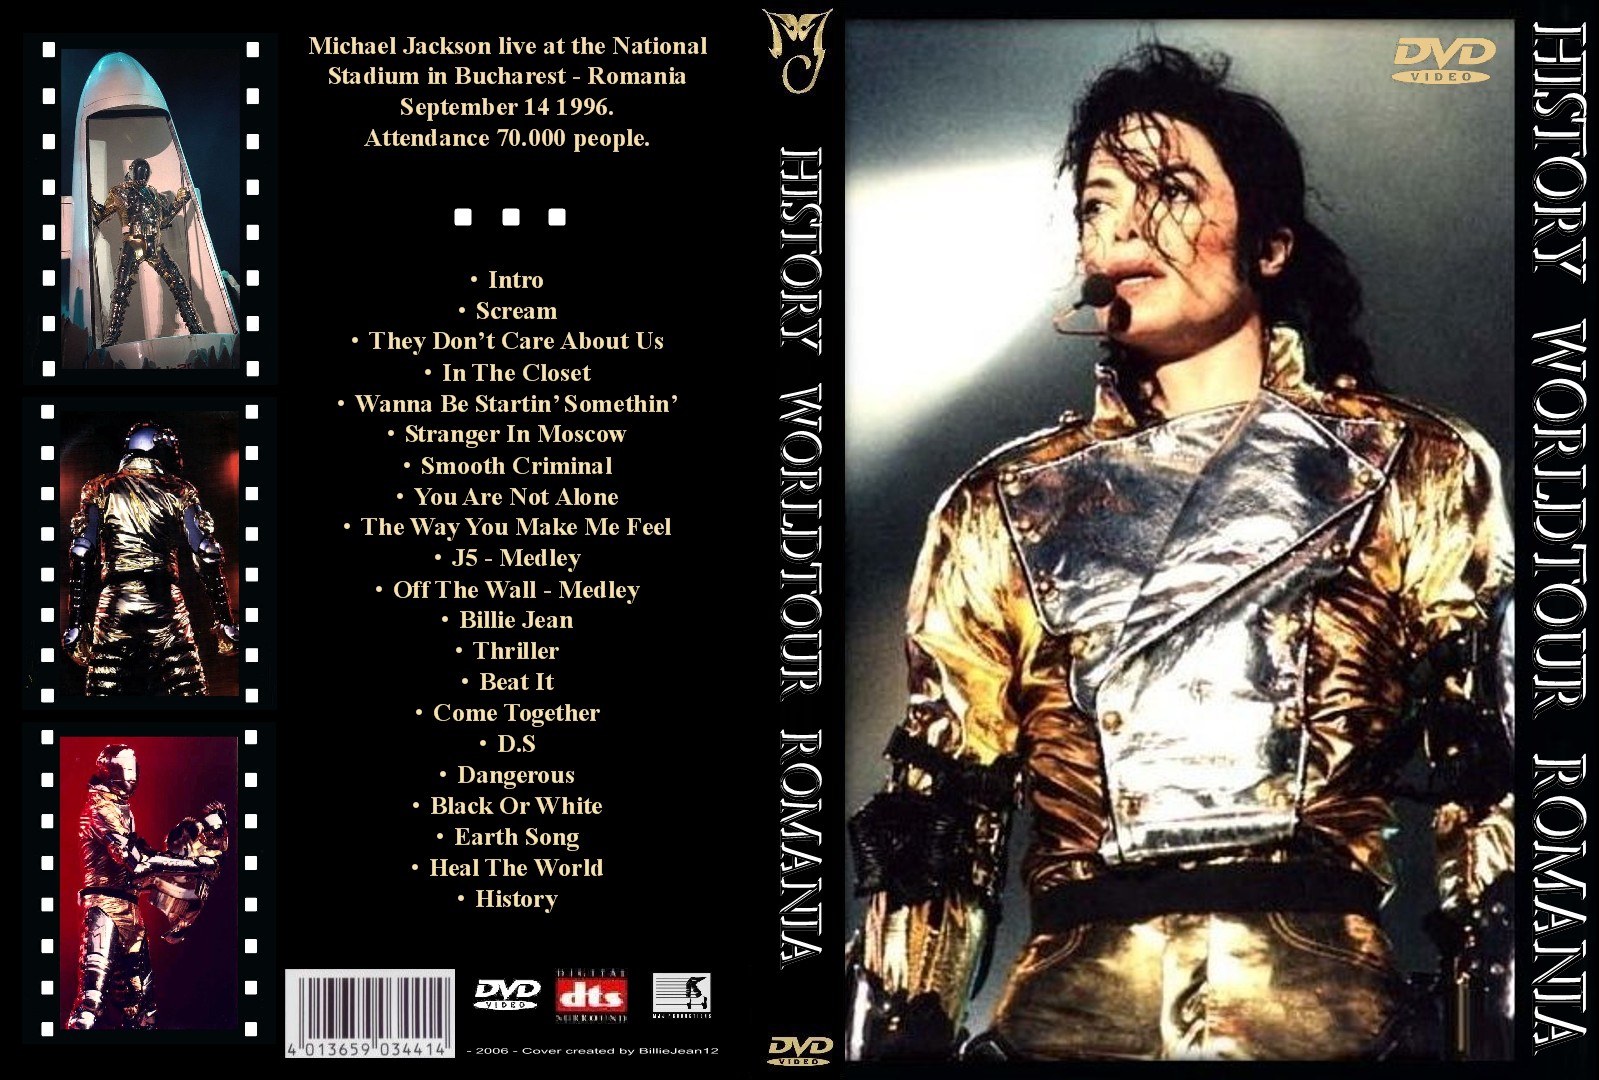 http://3.bp.blogspot.com/-bYDepJbNSUc/TgRr9uWQ4OI/AAAAAAAAAIk/kd2N6wUEiDE/s1600/Michael+Jackson+HIStory+Live+In+Bucharest.jpg